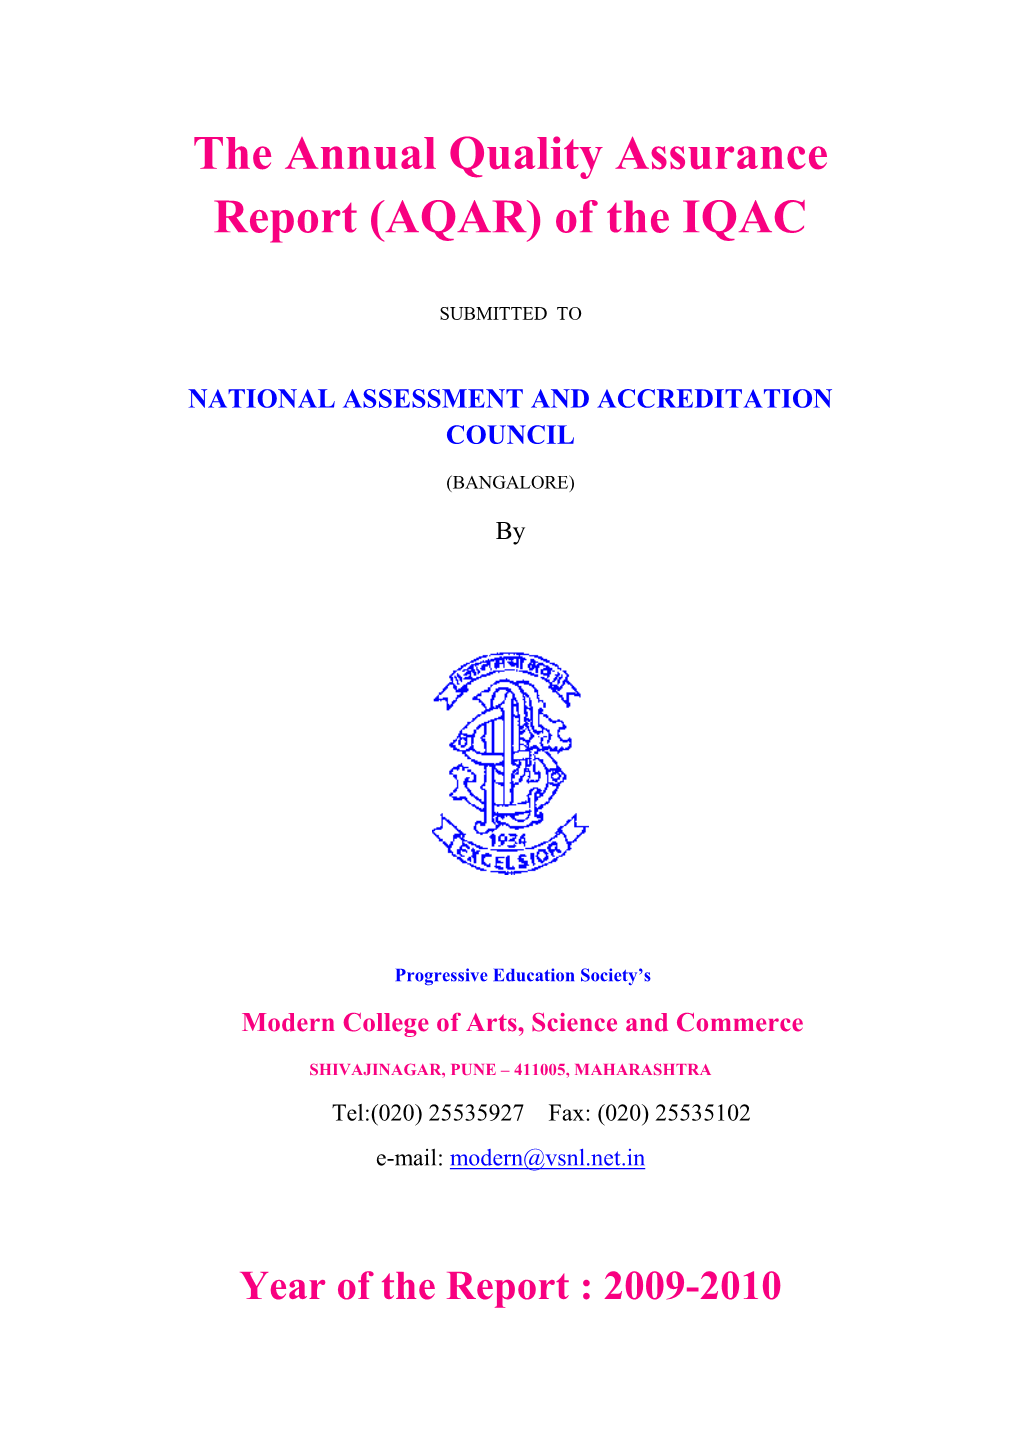 (AQAR) of the IQAC